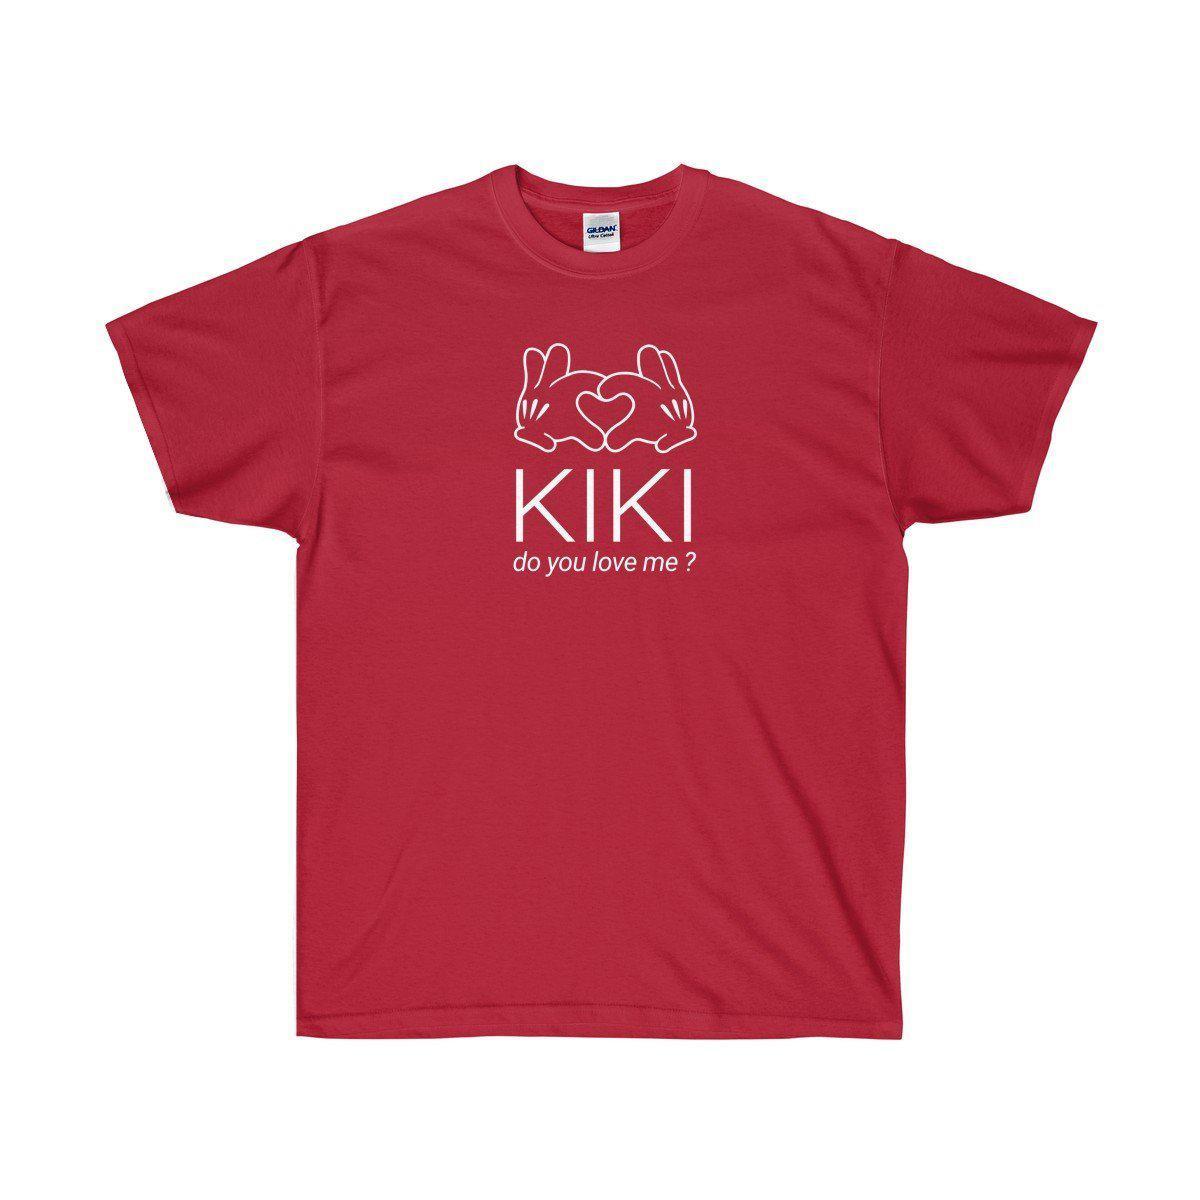 Kiki do you love me? In my feelings Tee - Drake inspired-Cardinal Red-S-Archethype